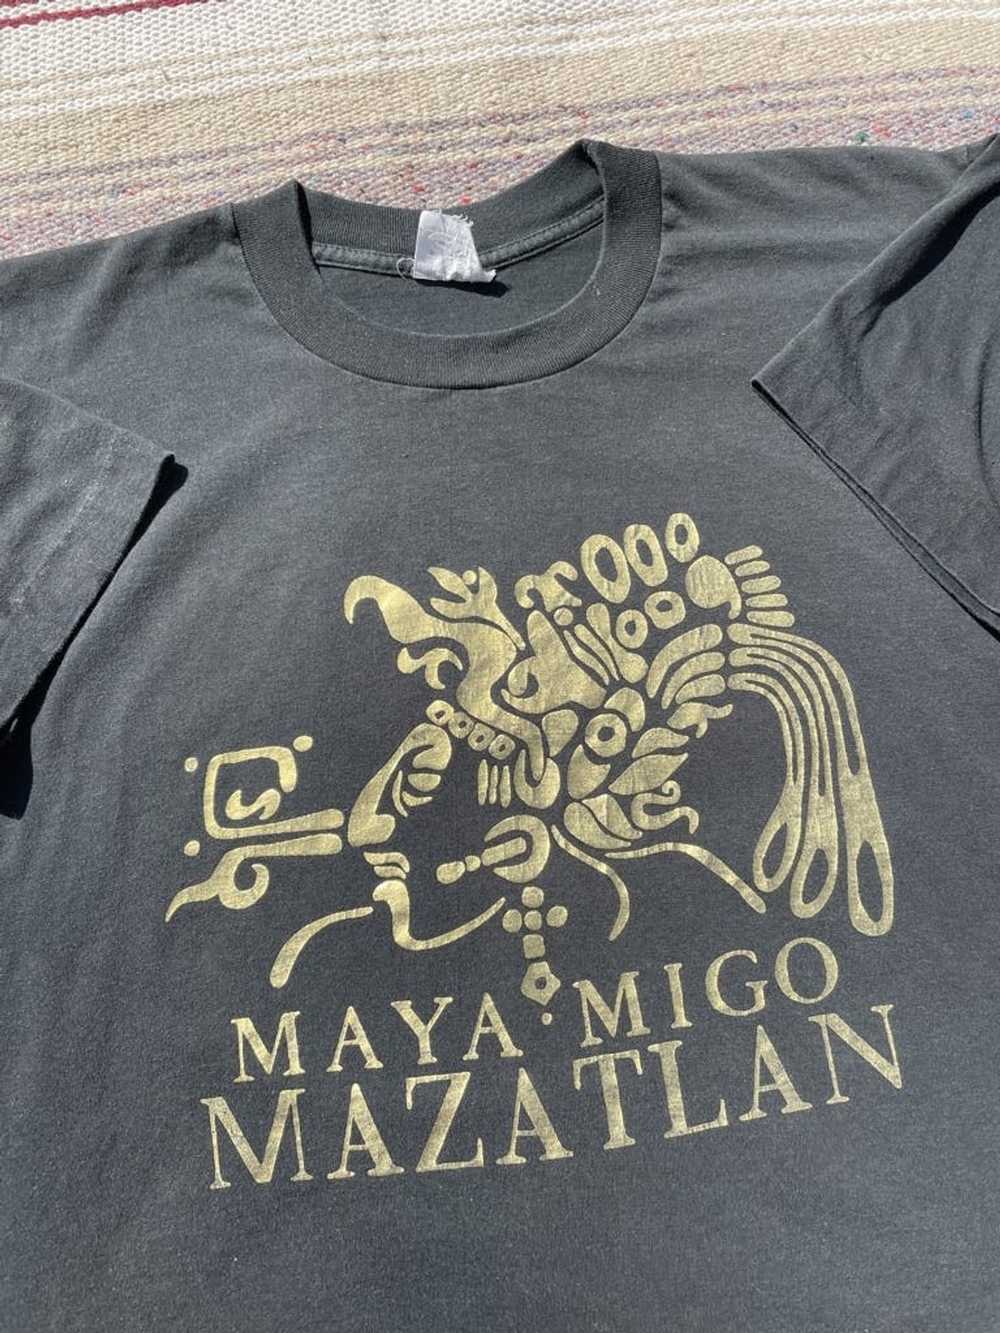 Vintage Maya Migo Mazatlan S.S. Tee- 1980s - image 3